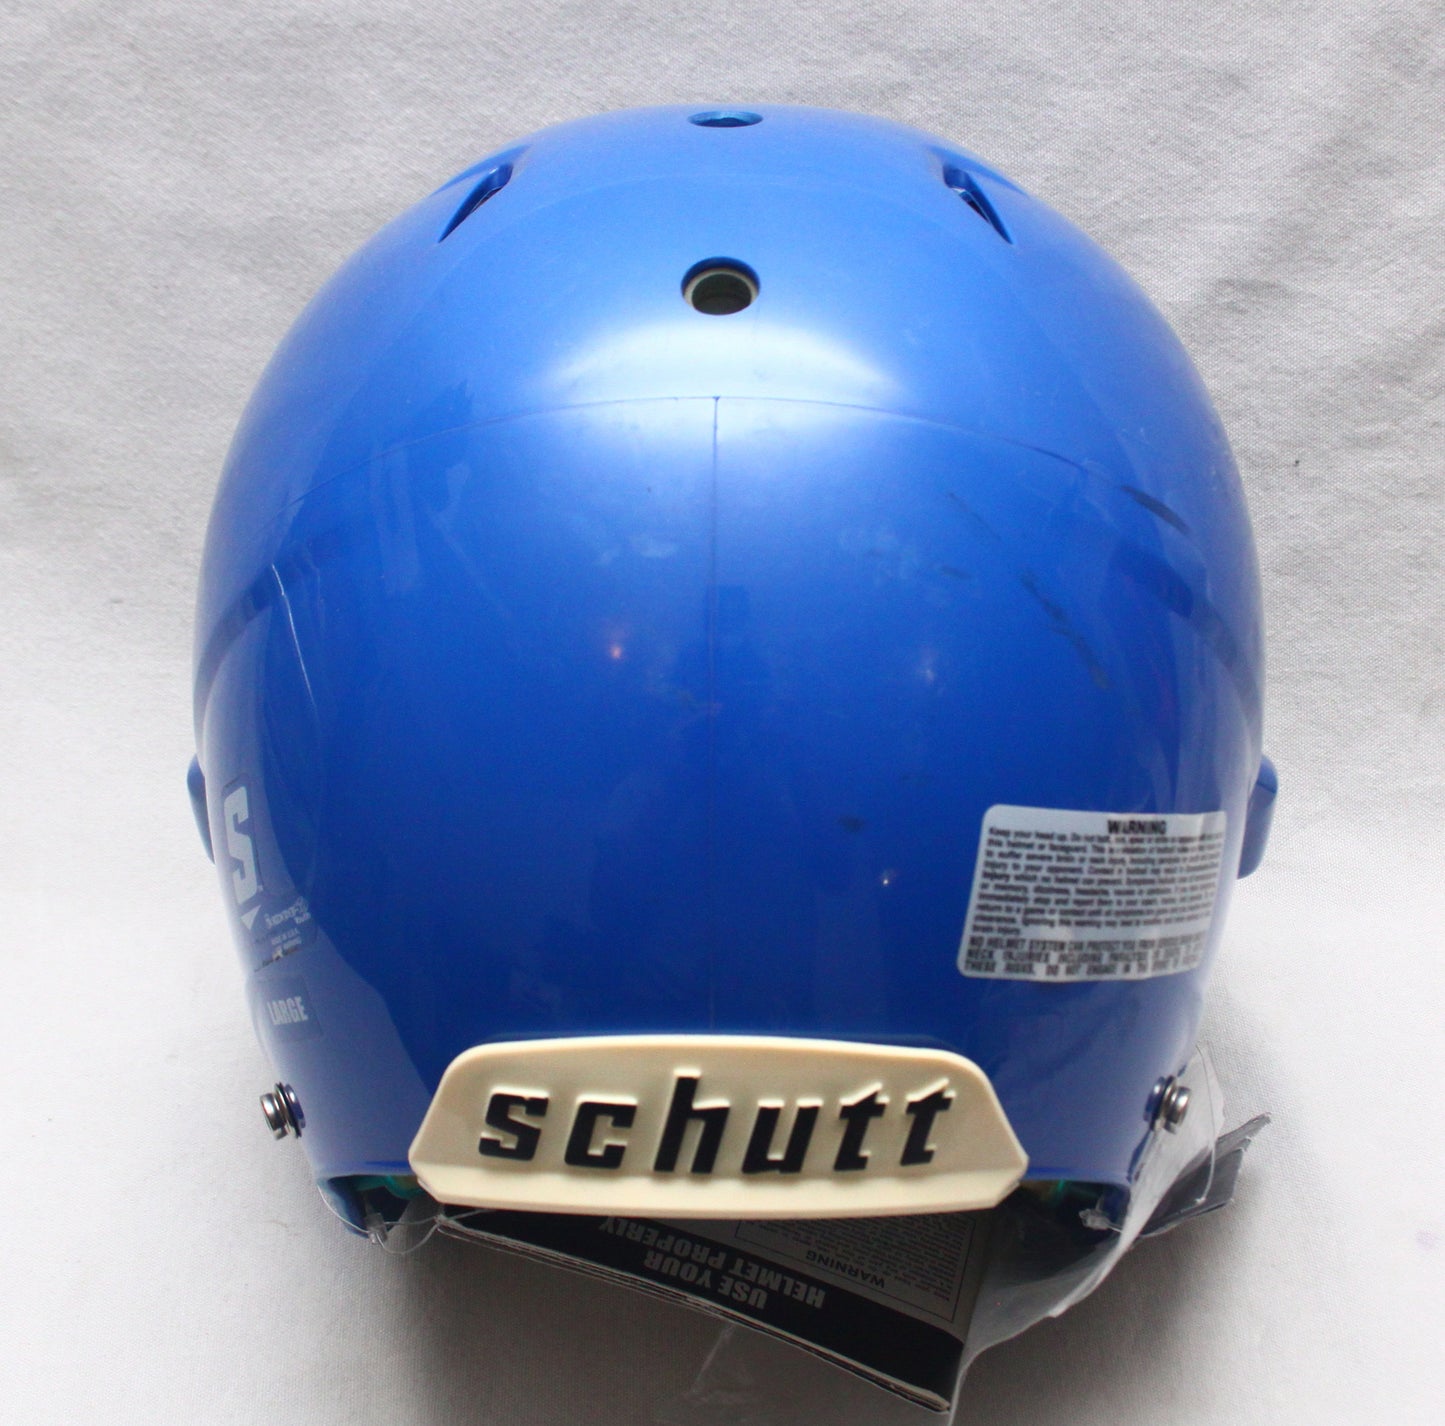 NOS / MINT Schutt Ion Youth Large Football Helmet - Royal Blue